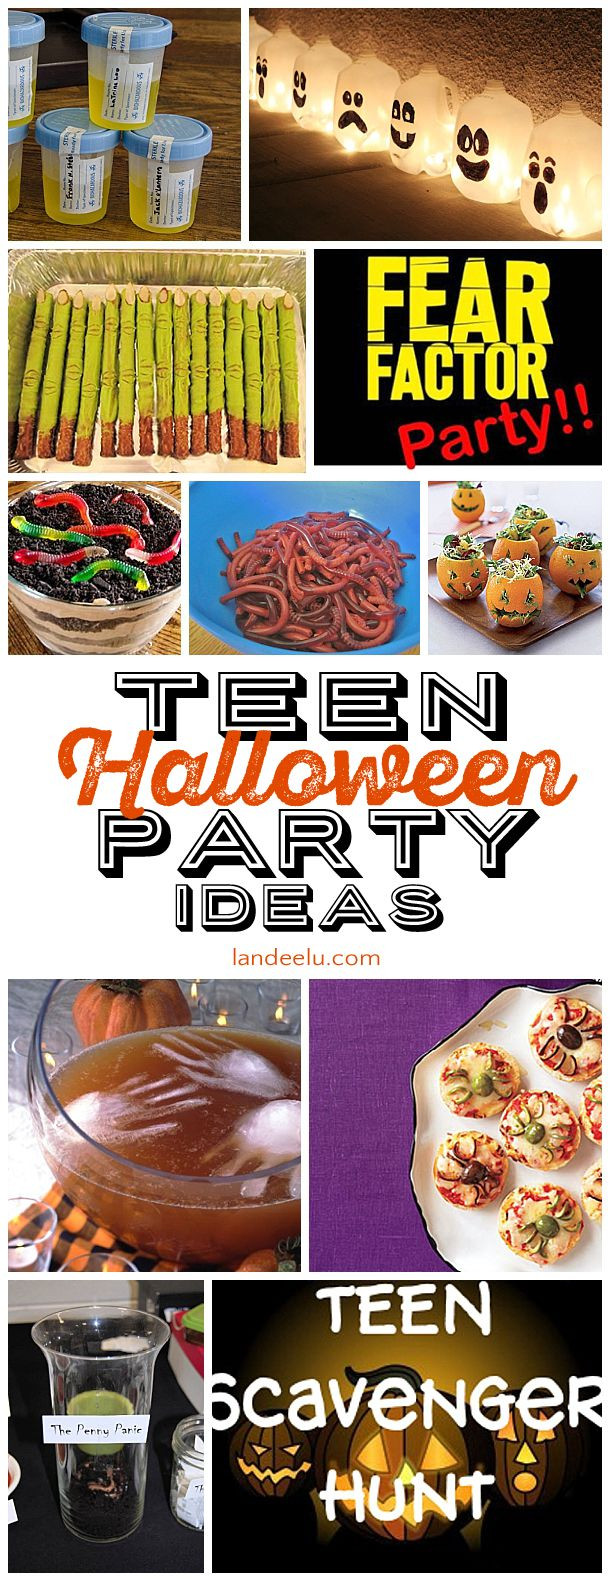 Tween Halloween Party Ideas
 Teen Halloween Party Ideas